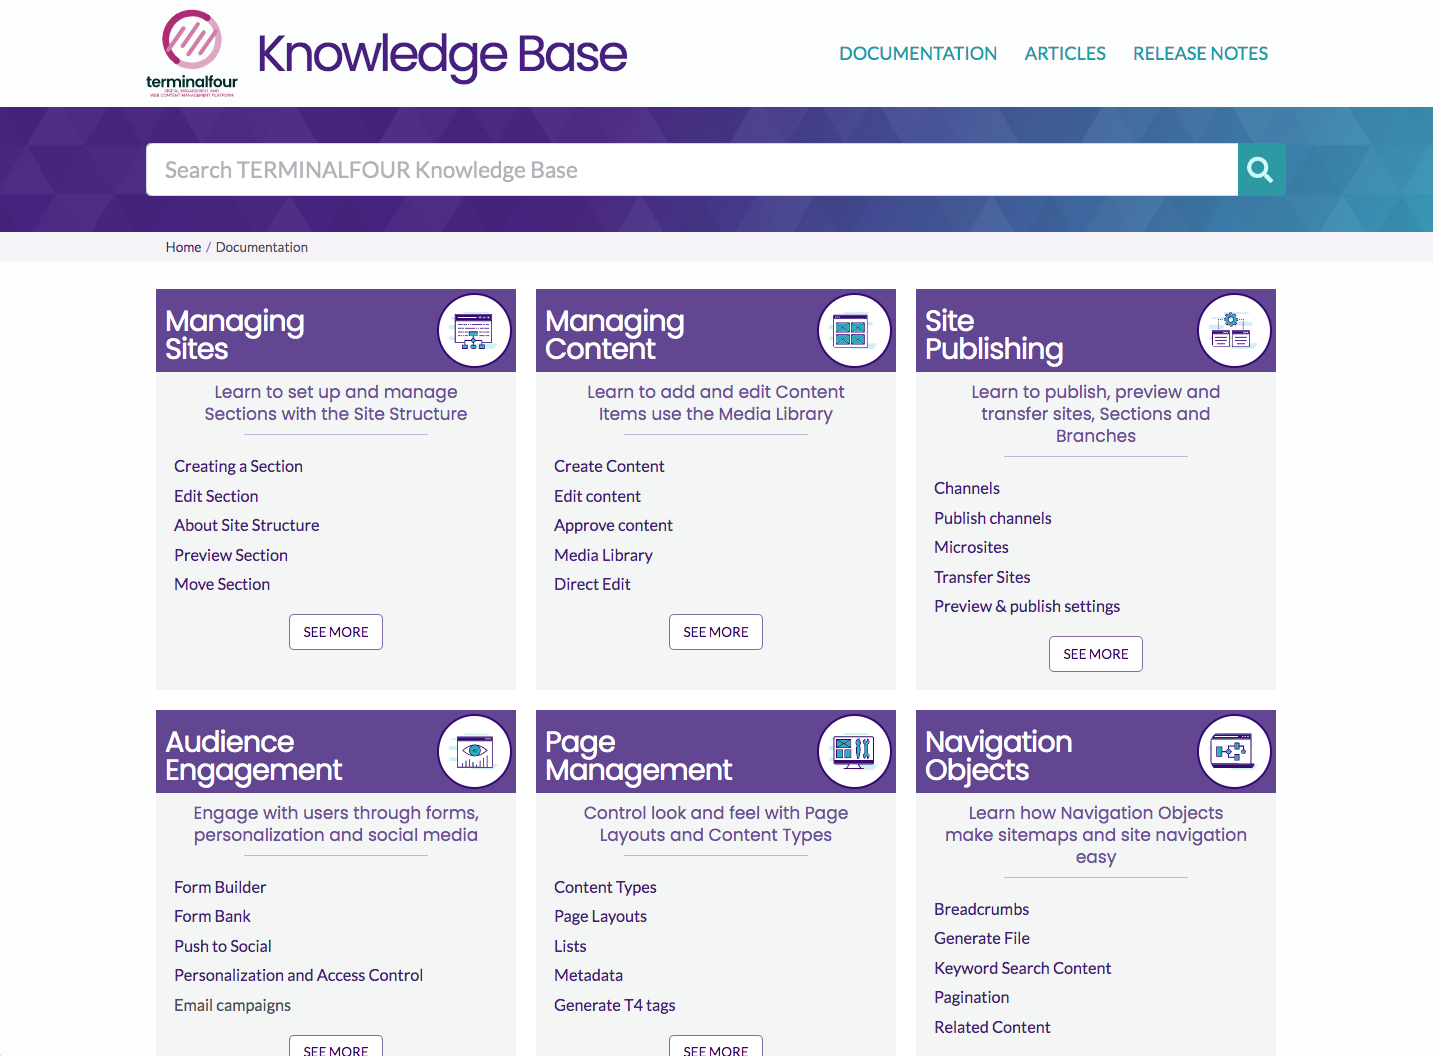 A screenshot of the knowledge base homepage